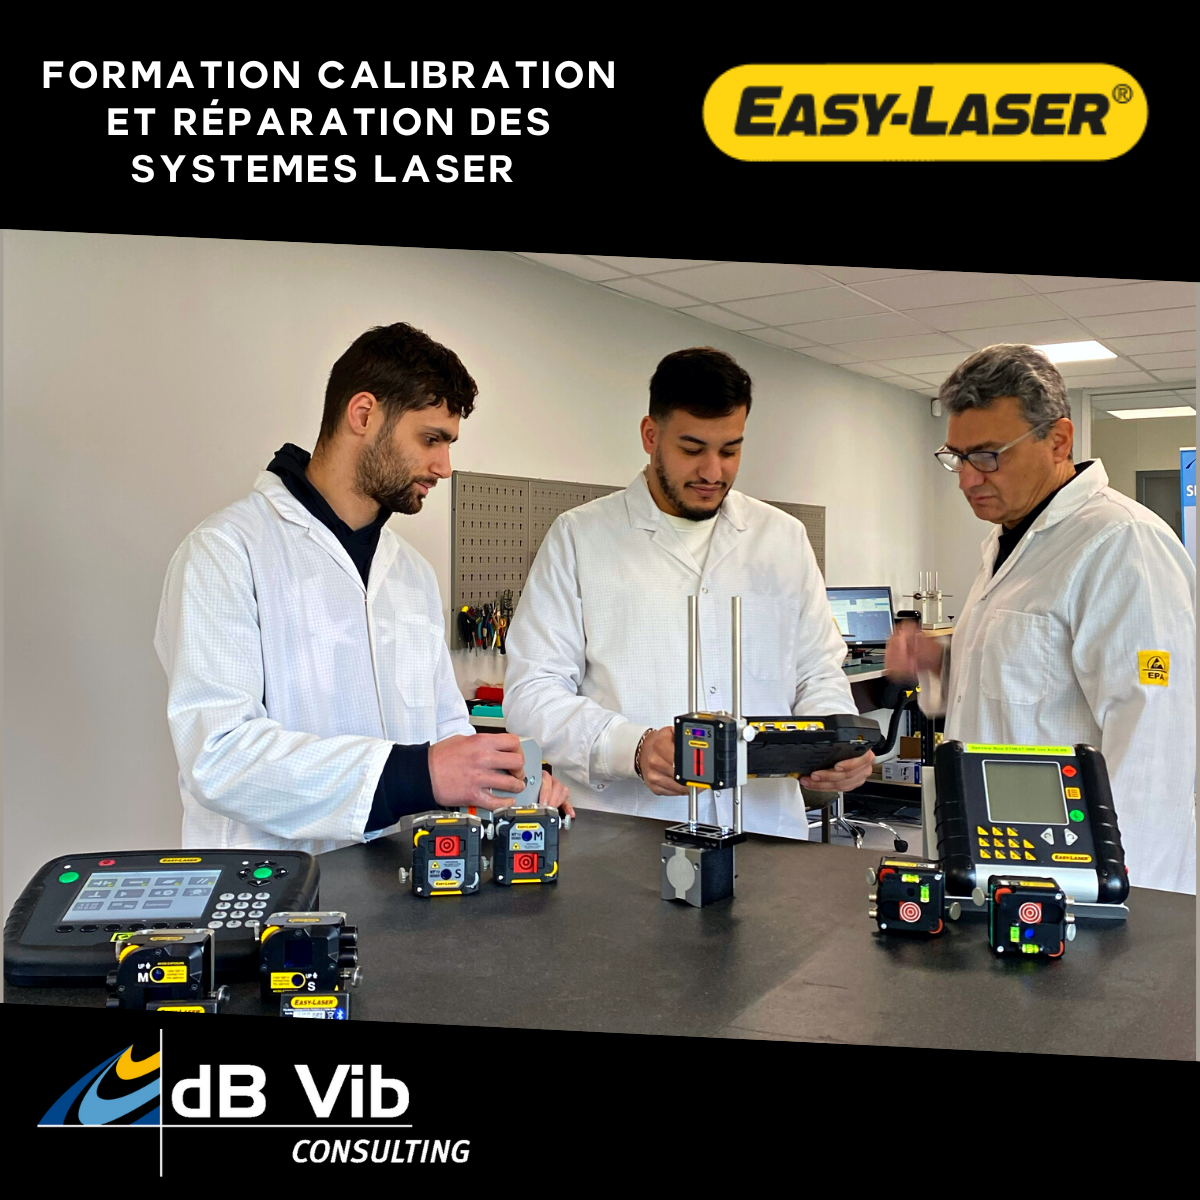 Formation Calibration/réparation des systèmes Easy-Laser